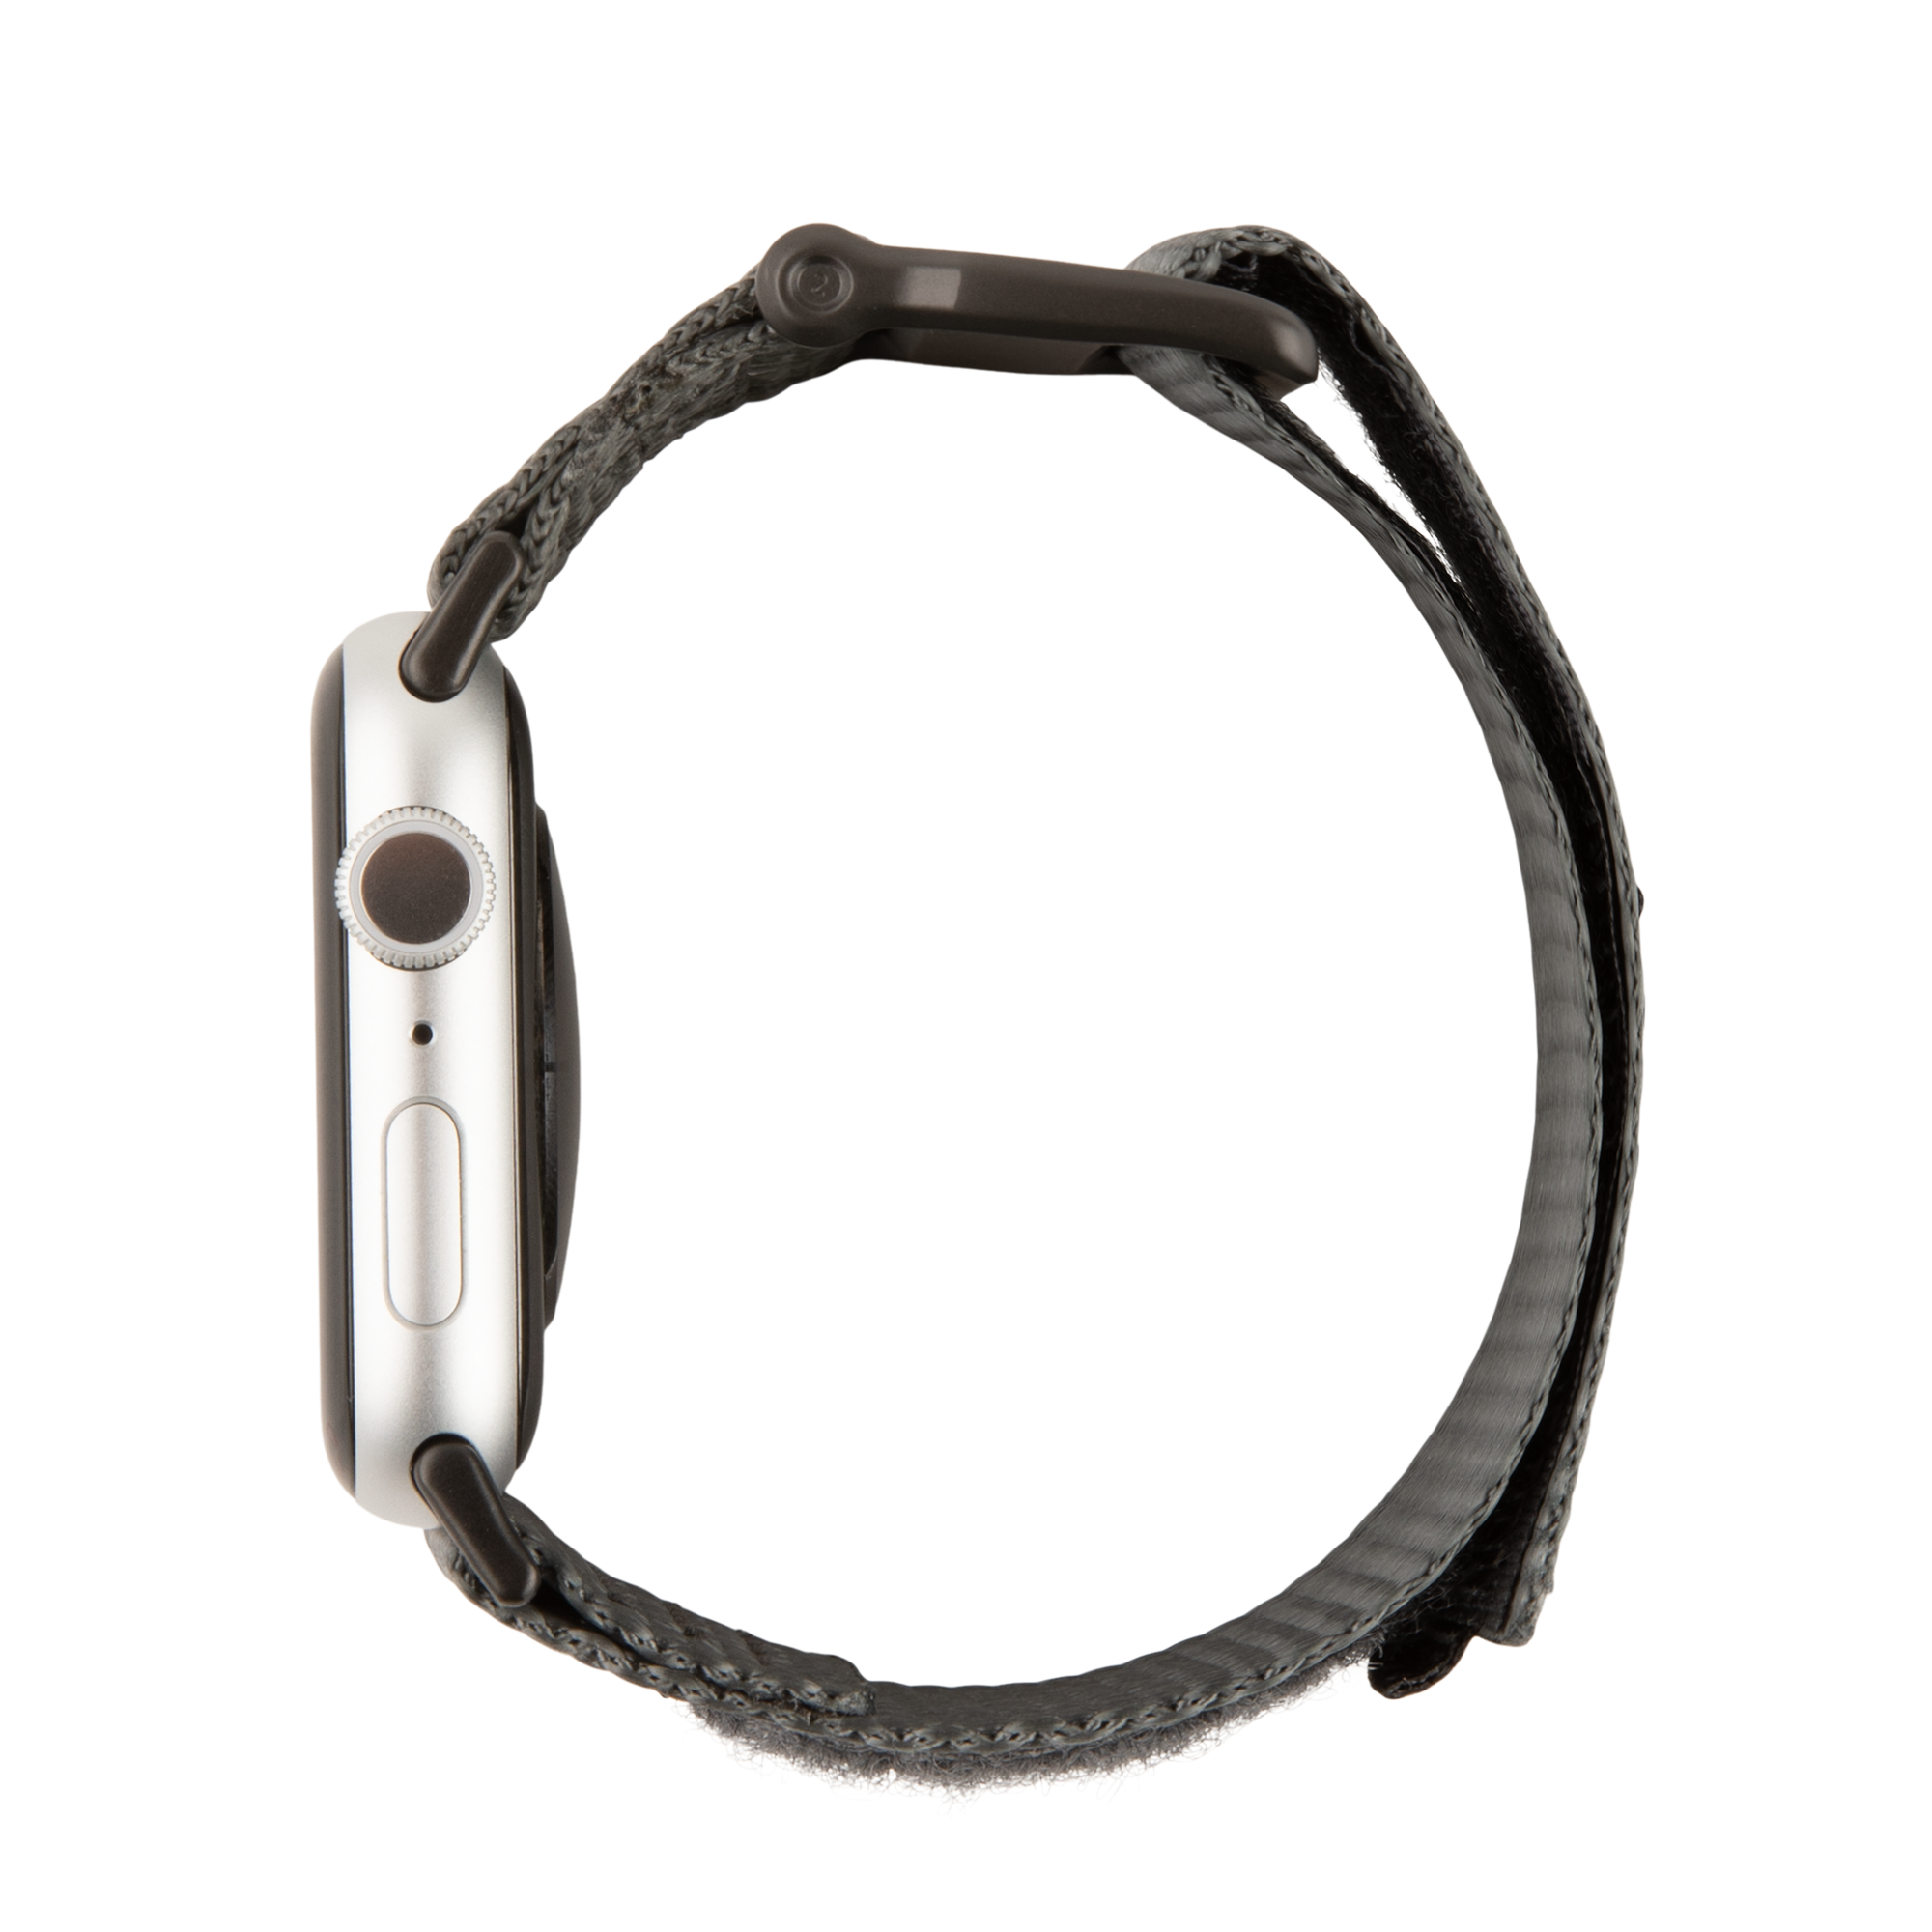 💙SPORT BANDS FOR SERIES 5💙 Apple Watch Bands - Fantas® 44mm 40mm  wallpaper 2020